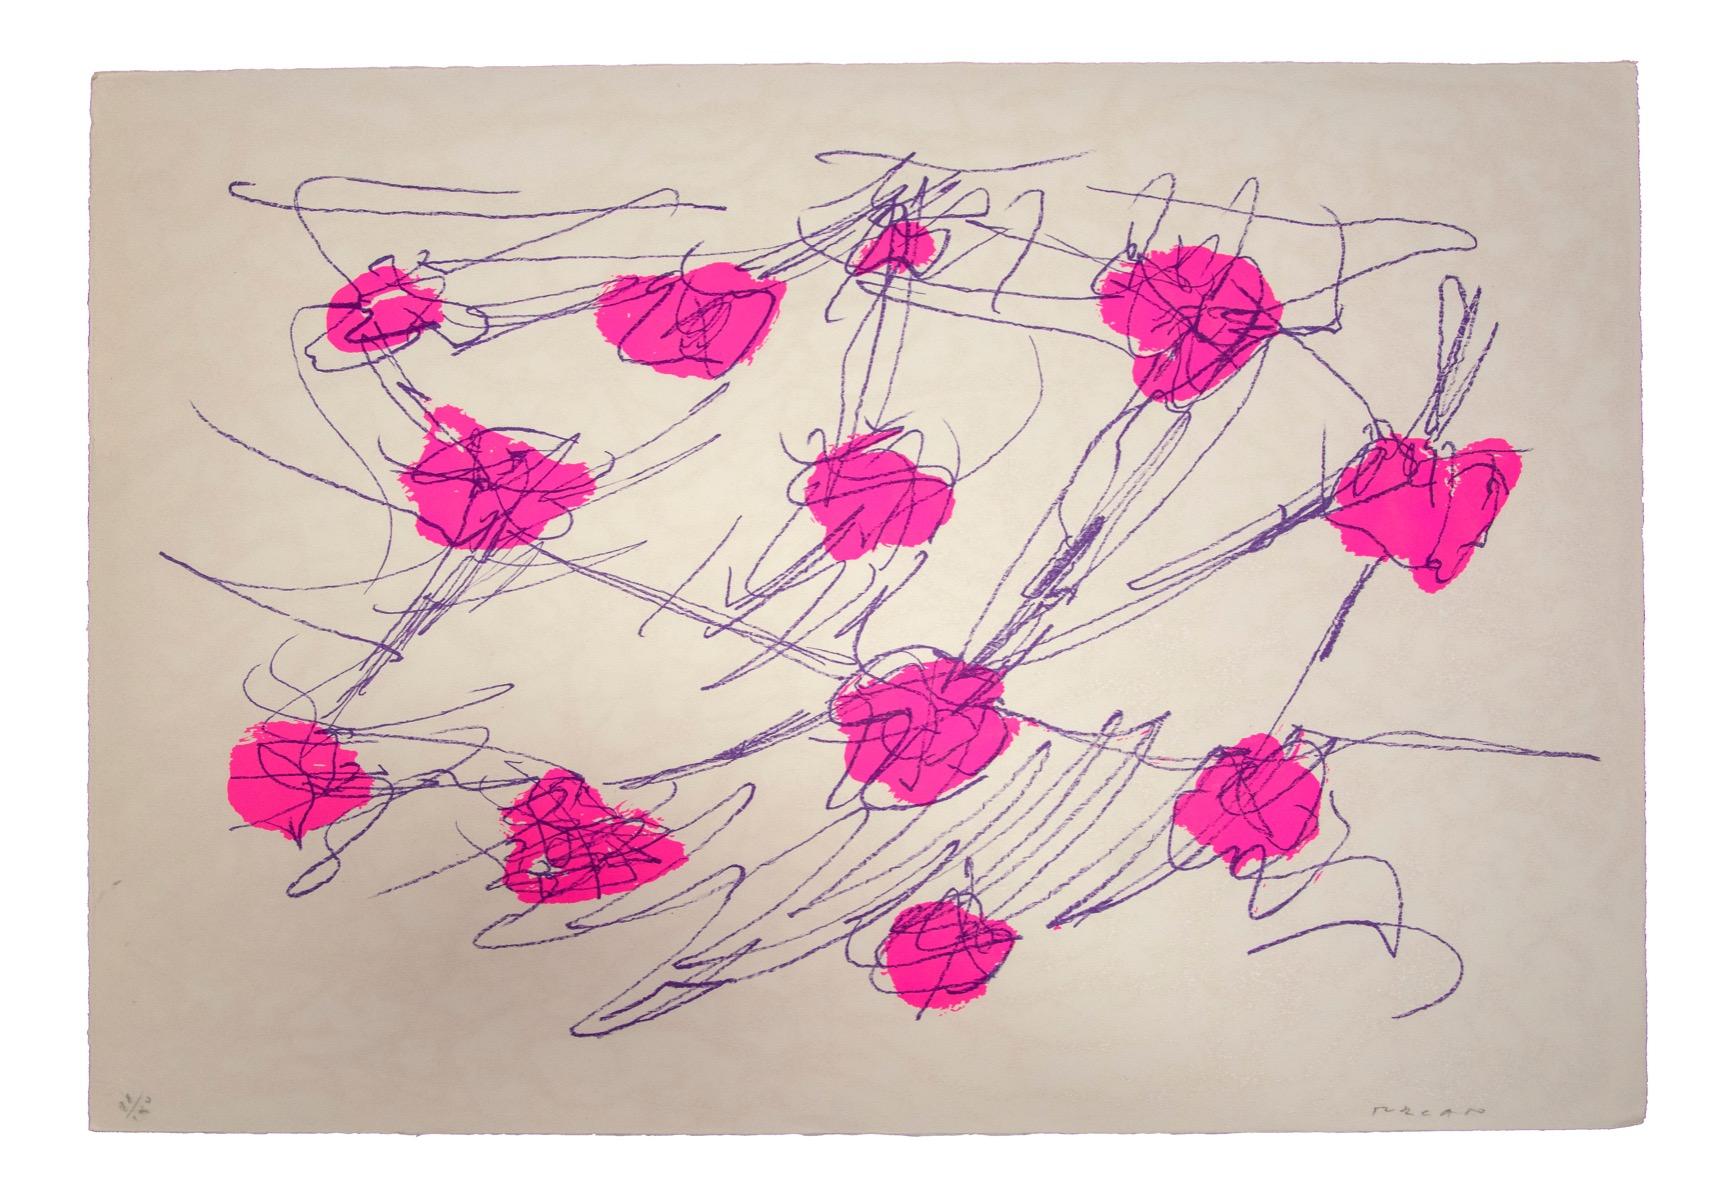 Abstract Composition - Original Screen Print by Giulio Turcato - 1970